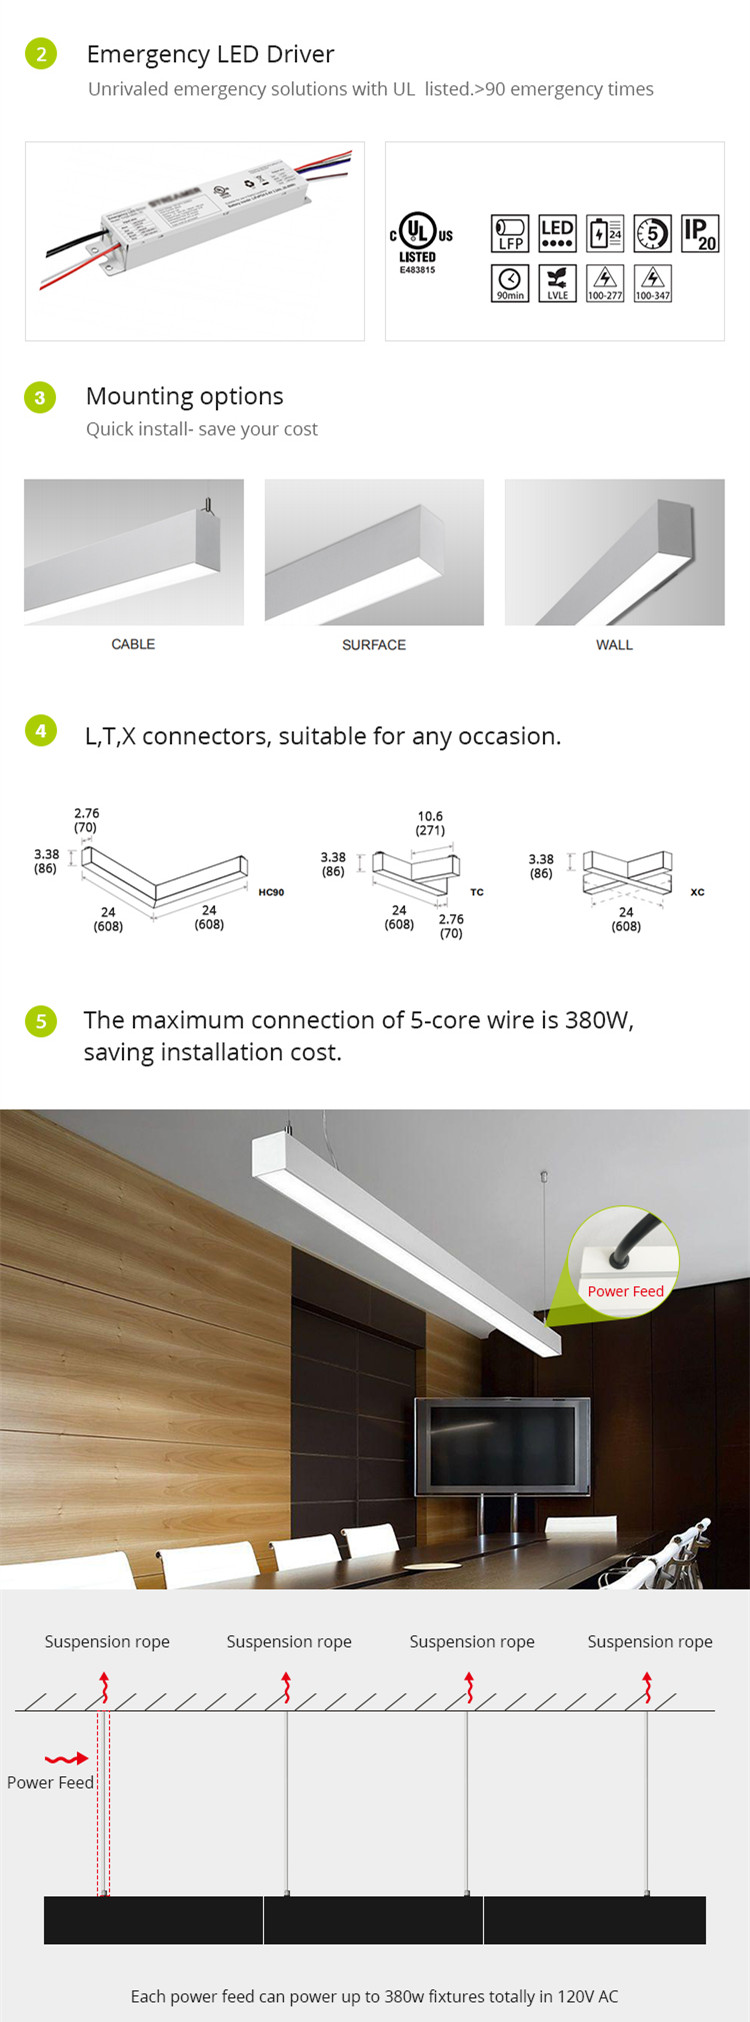 ETL UGR 19 Exterior LED Linear Light, Linear Under Cabinet Light, Exterior Linear Wall Washer